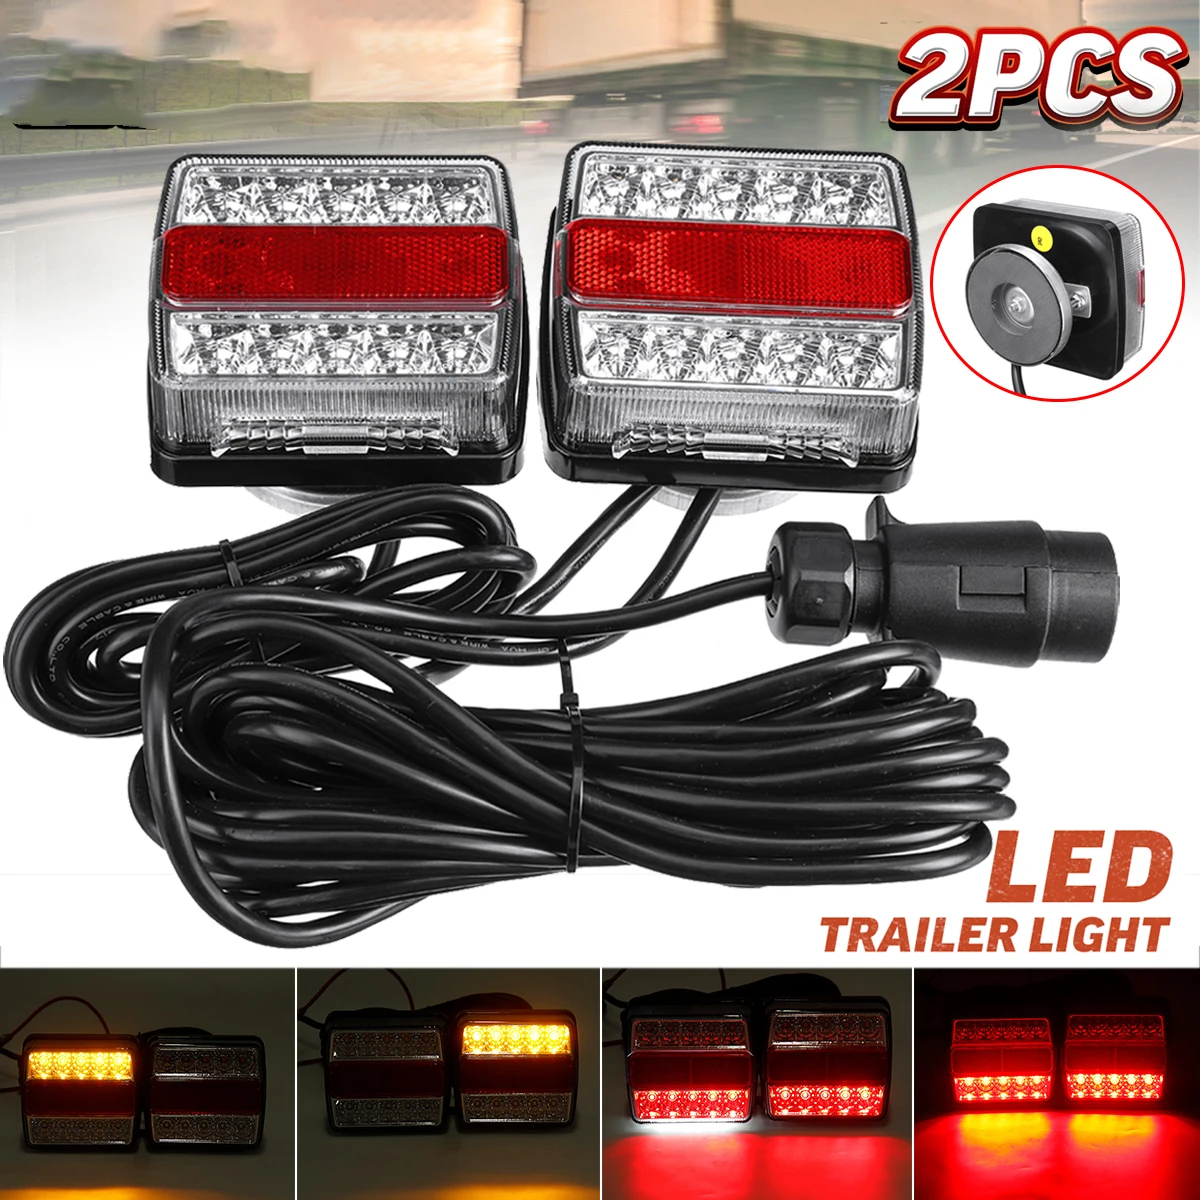 2Pcs Rear Towing Tail Lights 12V 10m 15 LED 7 Pin Trailer Light Kit Stop Indicator Lamp License Number Plate IP68 Waterproof